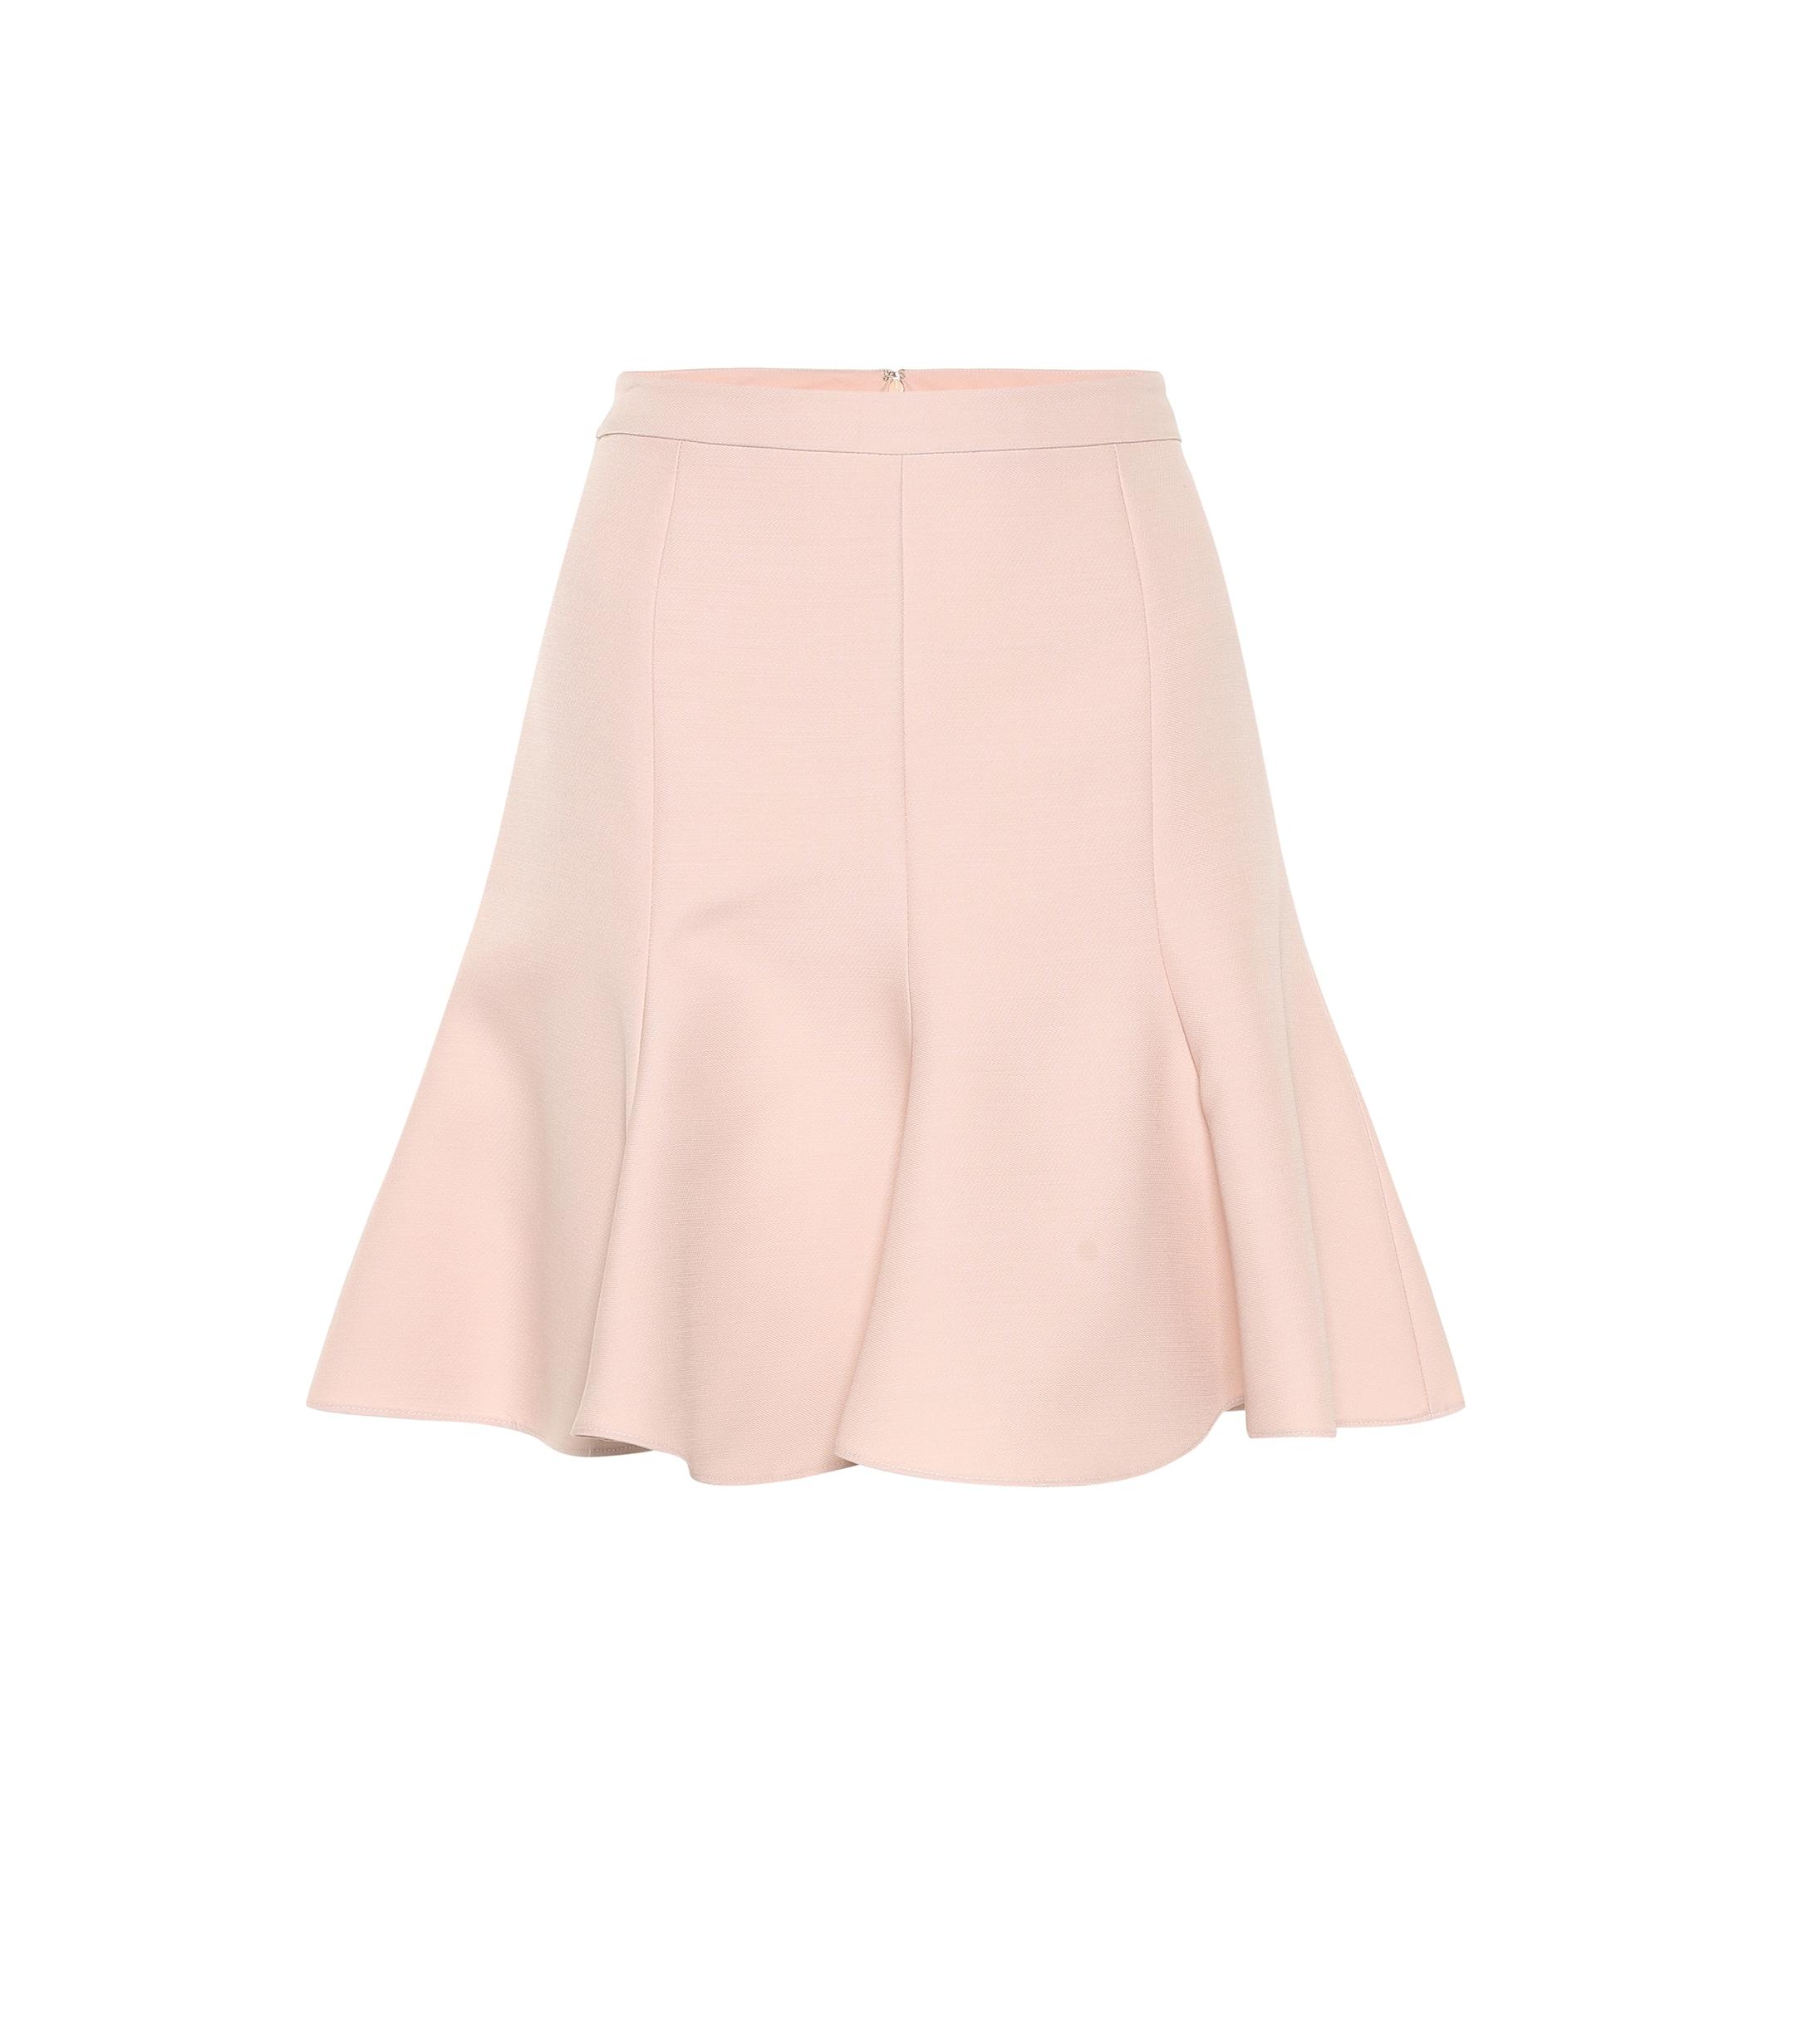 Stella McCartney Wool-blend Miniskirt in Pink - Lyst